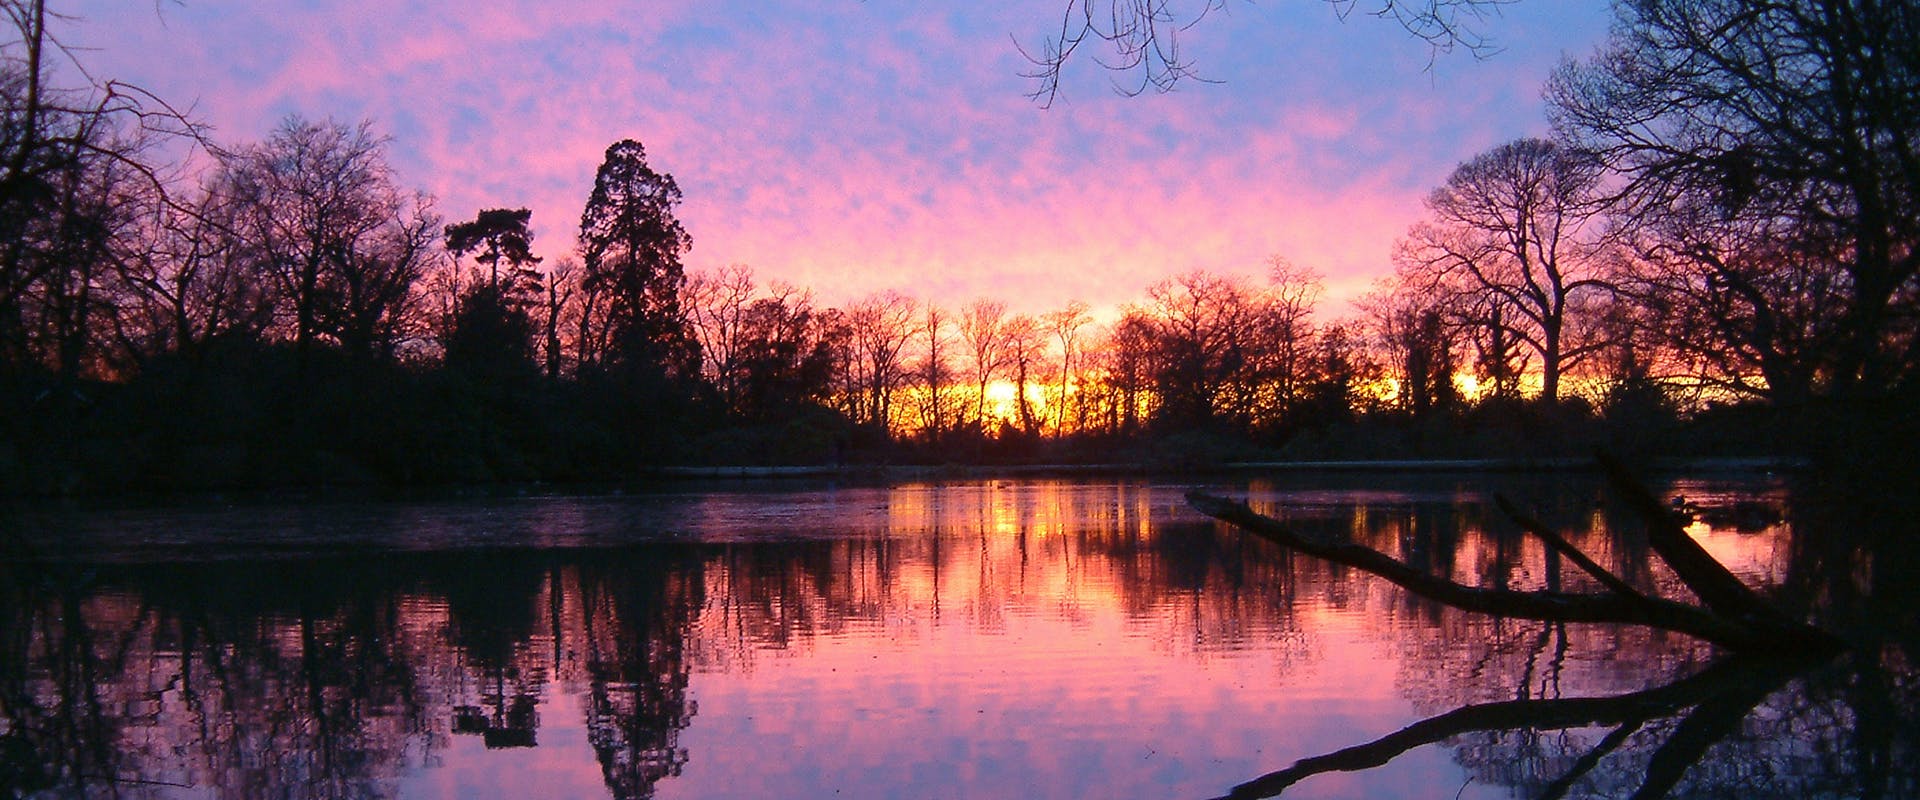 Sunset over Danbury Lakes, Danbury Country Park 